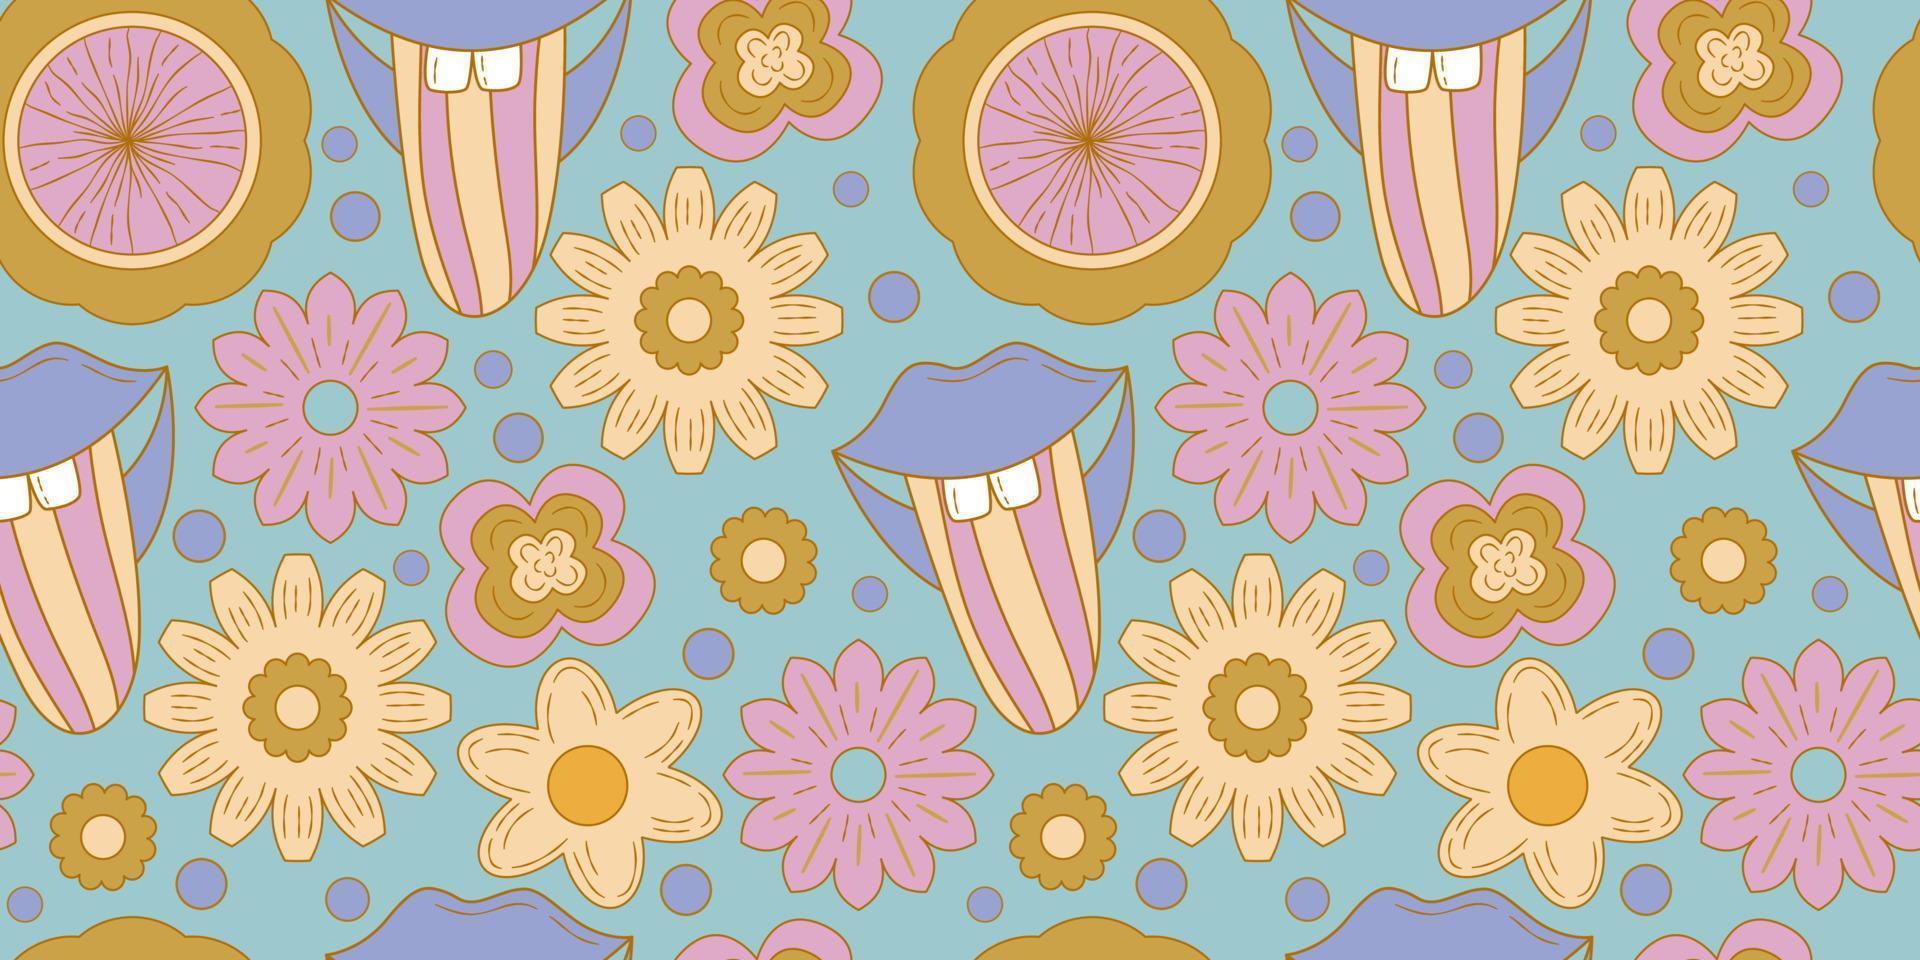 Groovy y2k retro seamless pattern with flower, lips. Retro vector illustration. Groovy flower background. Colorful hippie seamless pattern illustration.